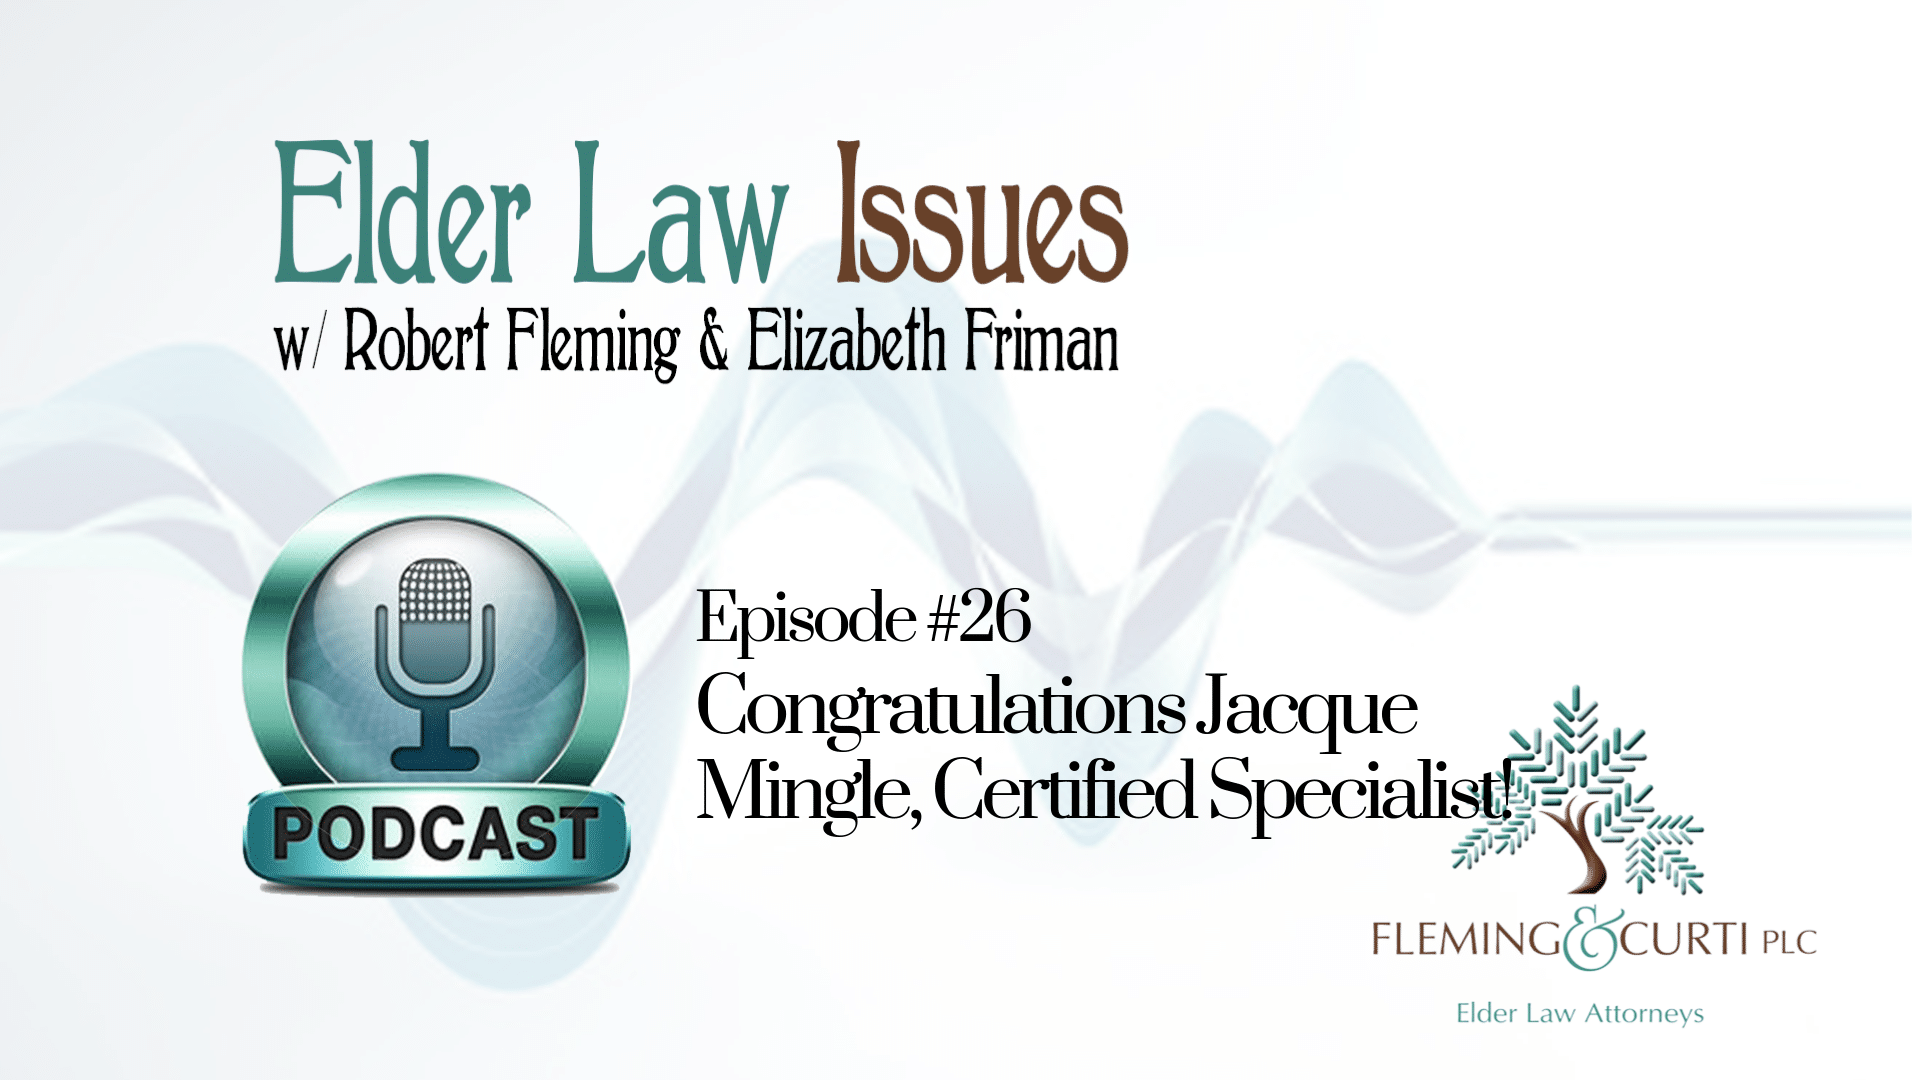 Congratulations Jacque Mingle, Certified Specialist